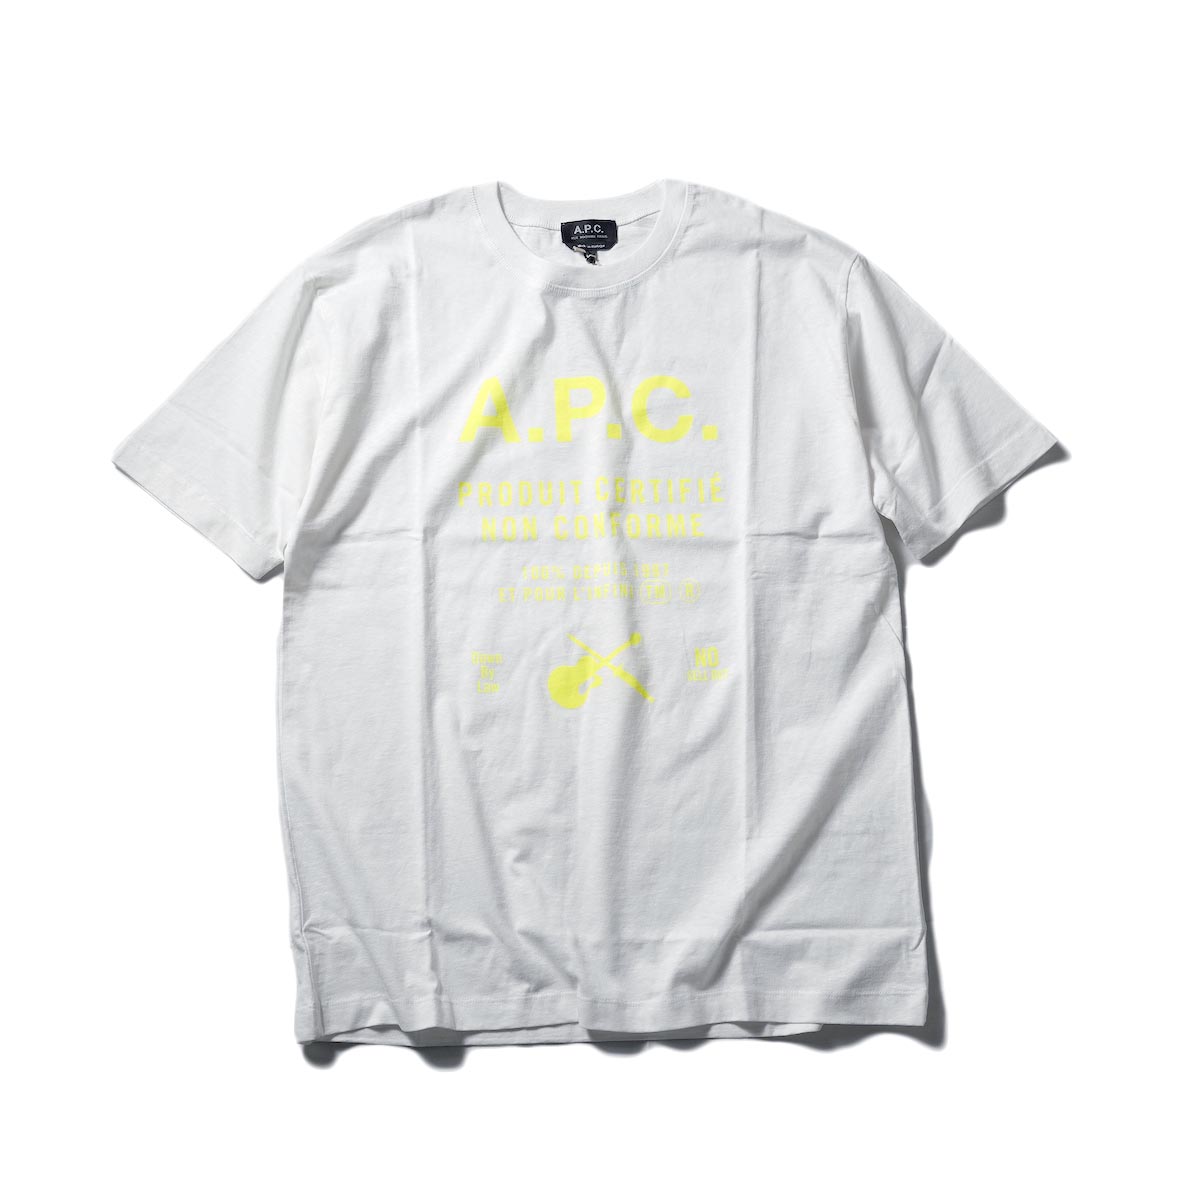 A.P.C. / IRVIN Tシャツ (White)